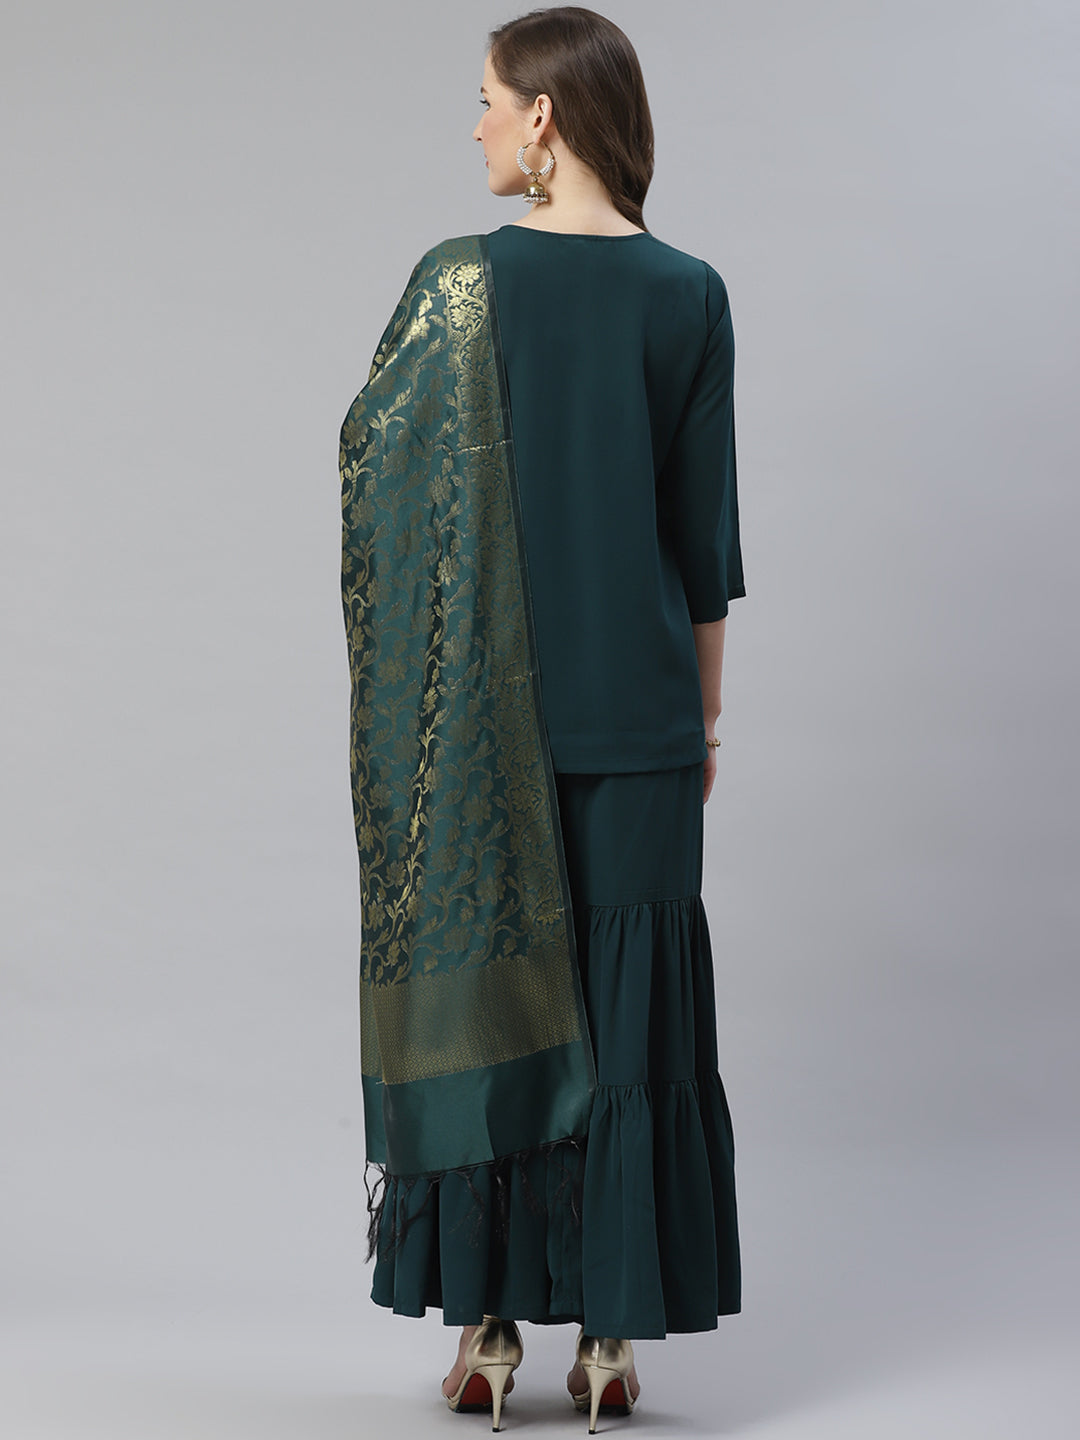 Jompers Women Green & Golden Solid Kurti with Sharara & Woven Design Dupatta